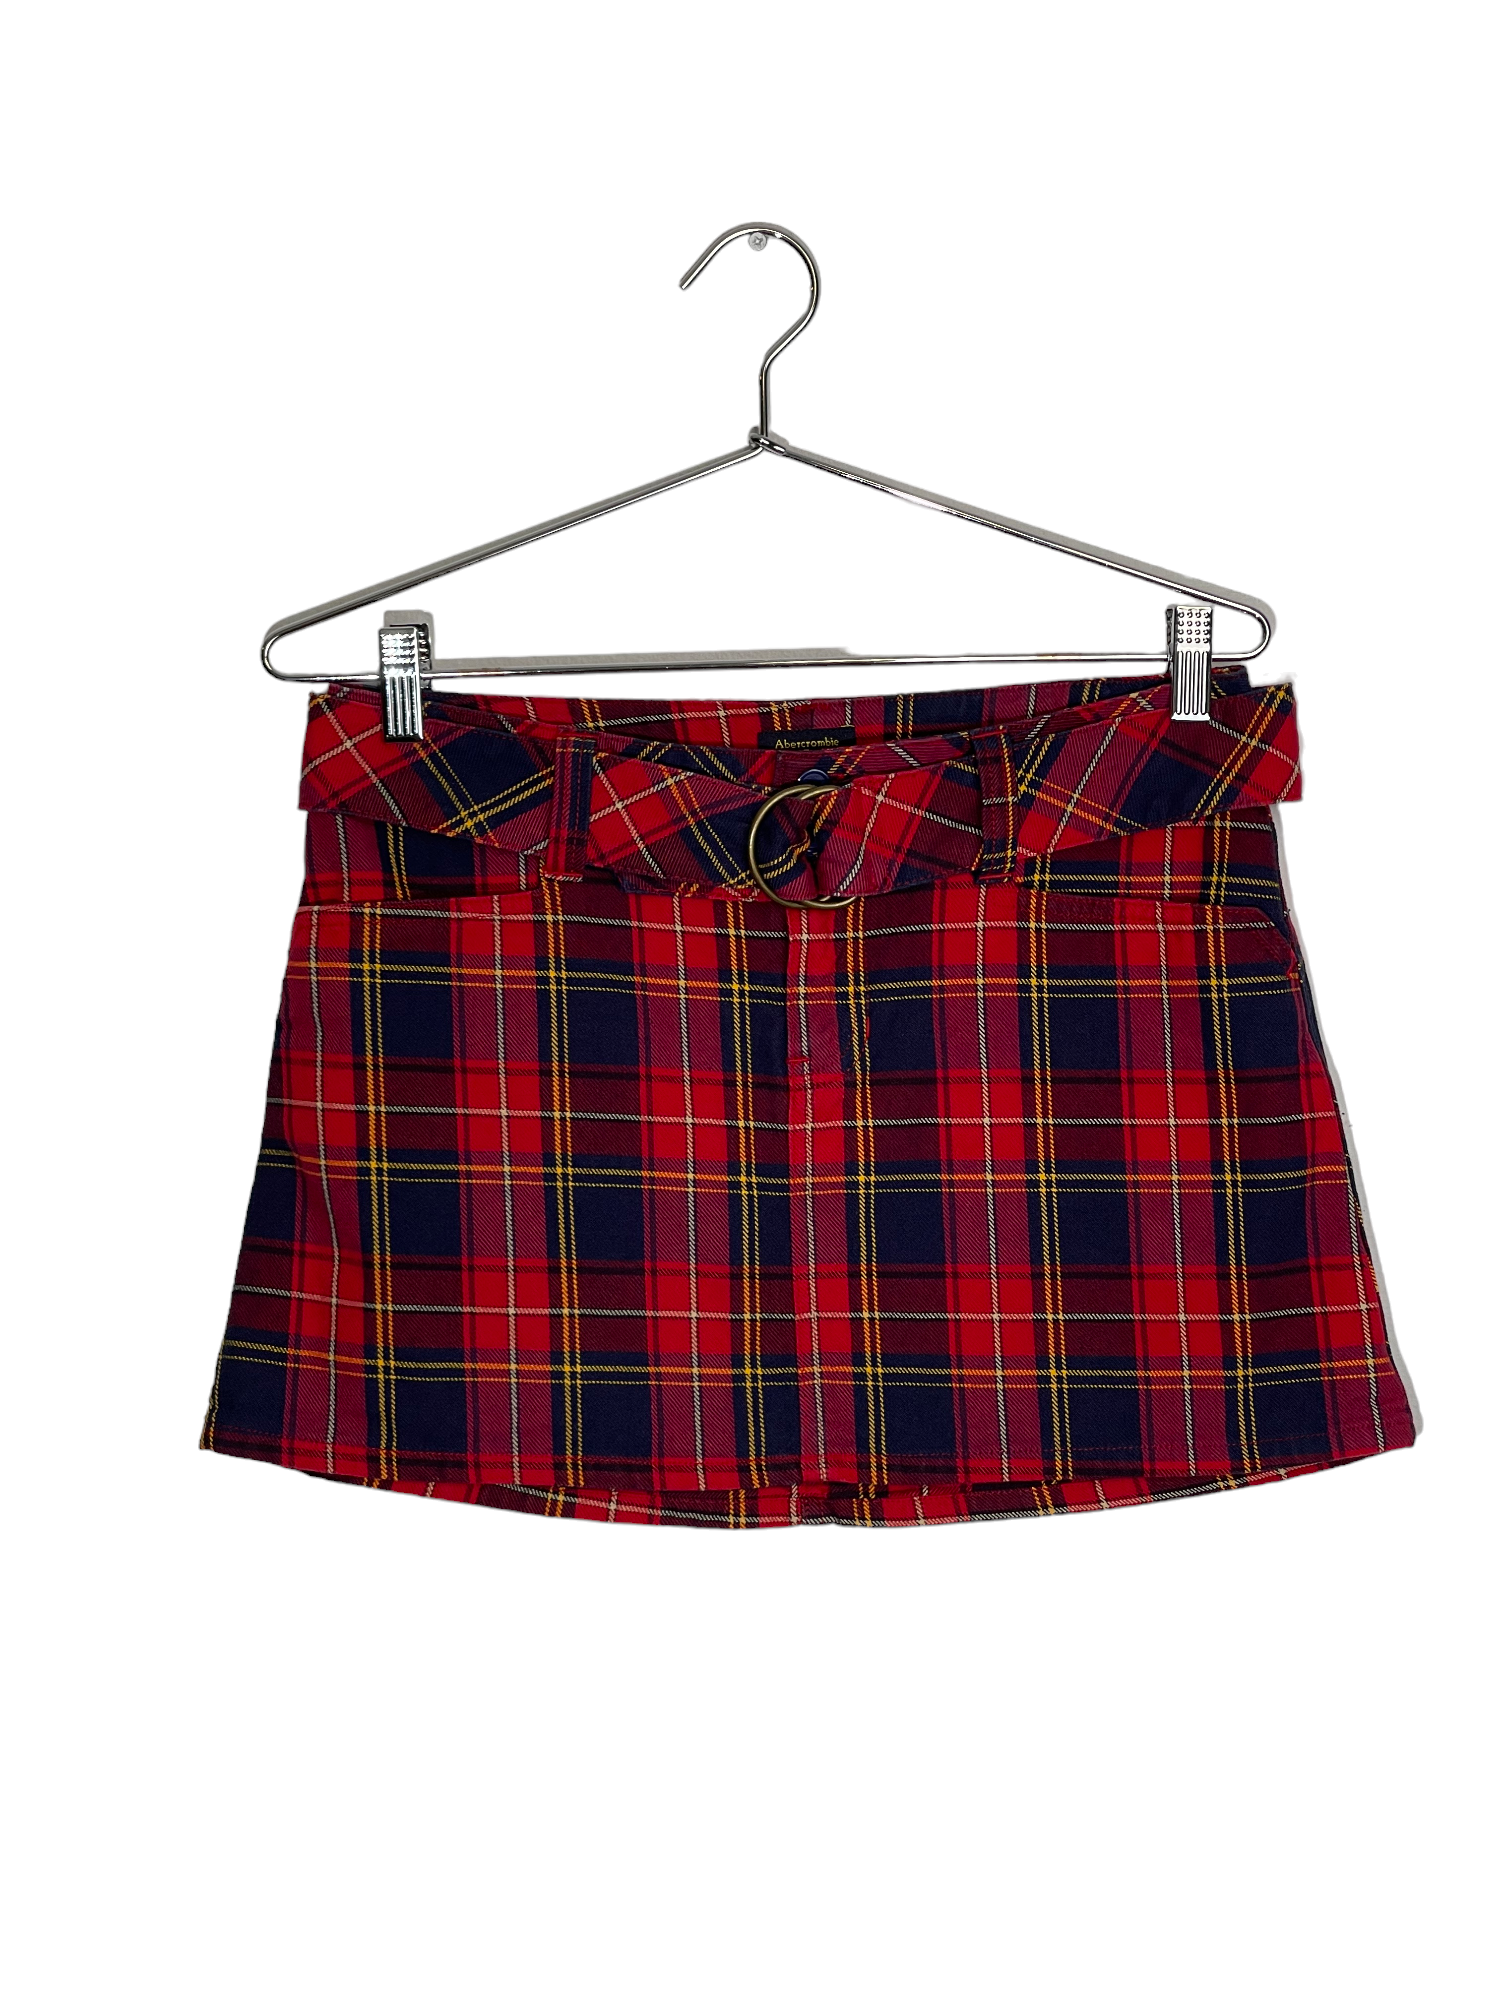 A&F Red Plaid Mini Skirt